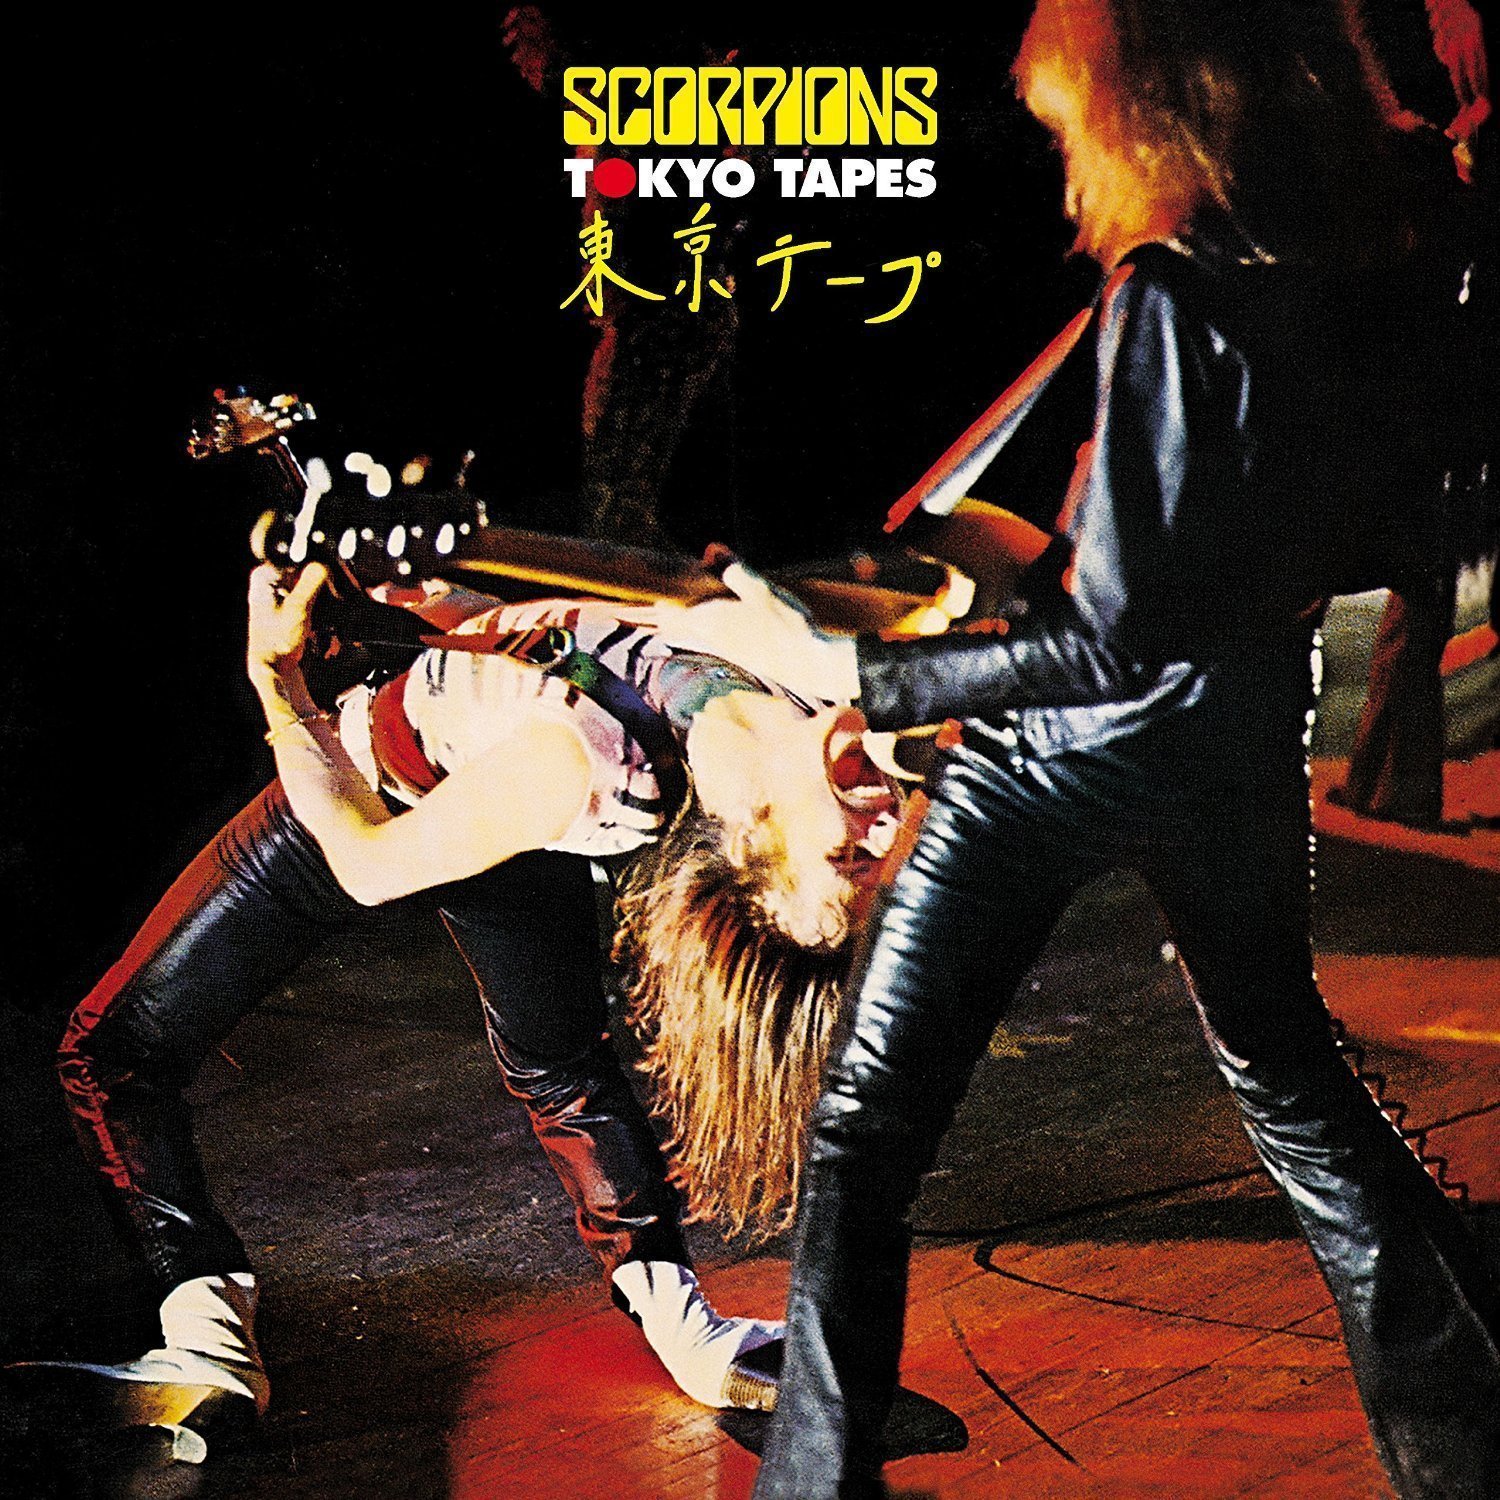 Vinyl Record Scorpions - Tokyo Tapes - Live (2 CD + 2 LP)